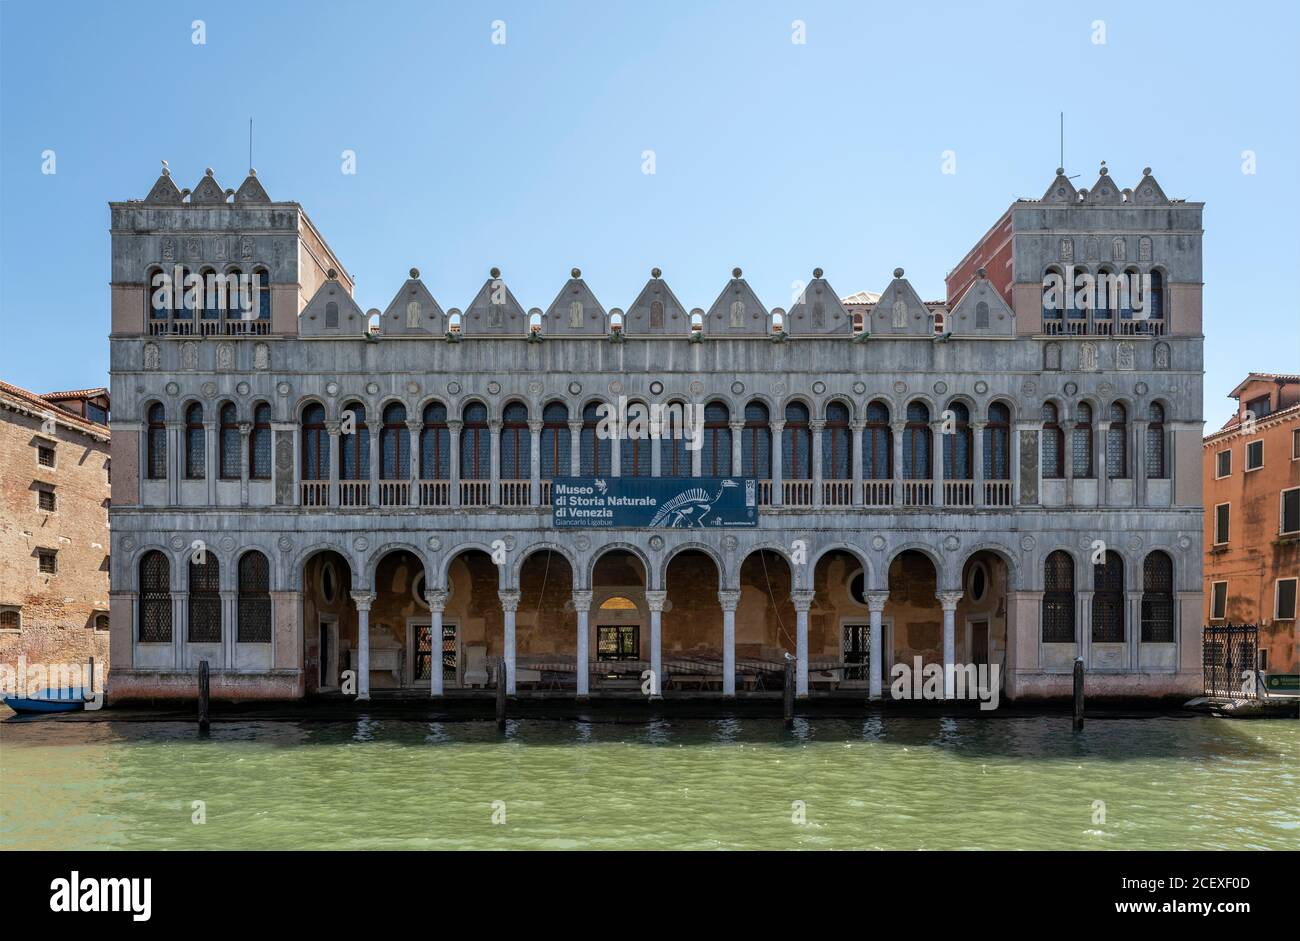 Venedig, Paläste am Canal Grande, Fontego dei Turchi (ital. Fondaco dei Turchi), reicht bis etwa 1225 zurück Foto Stock